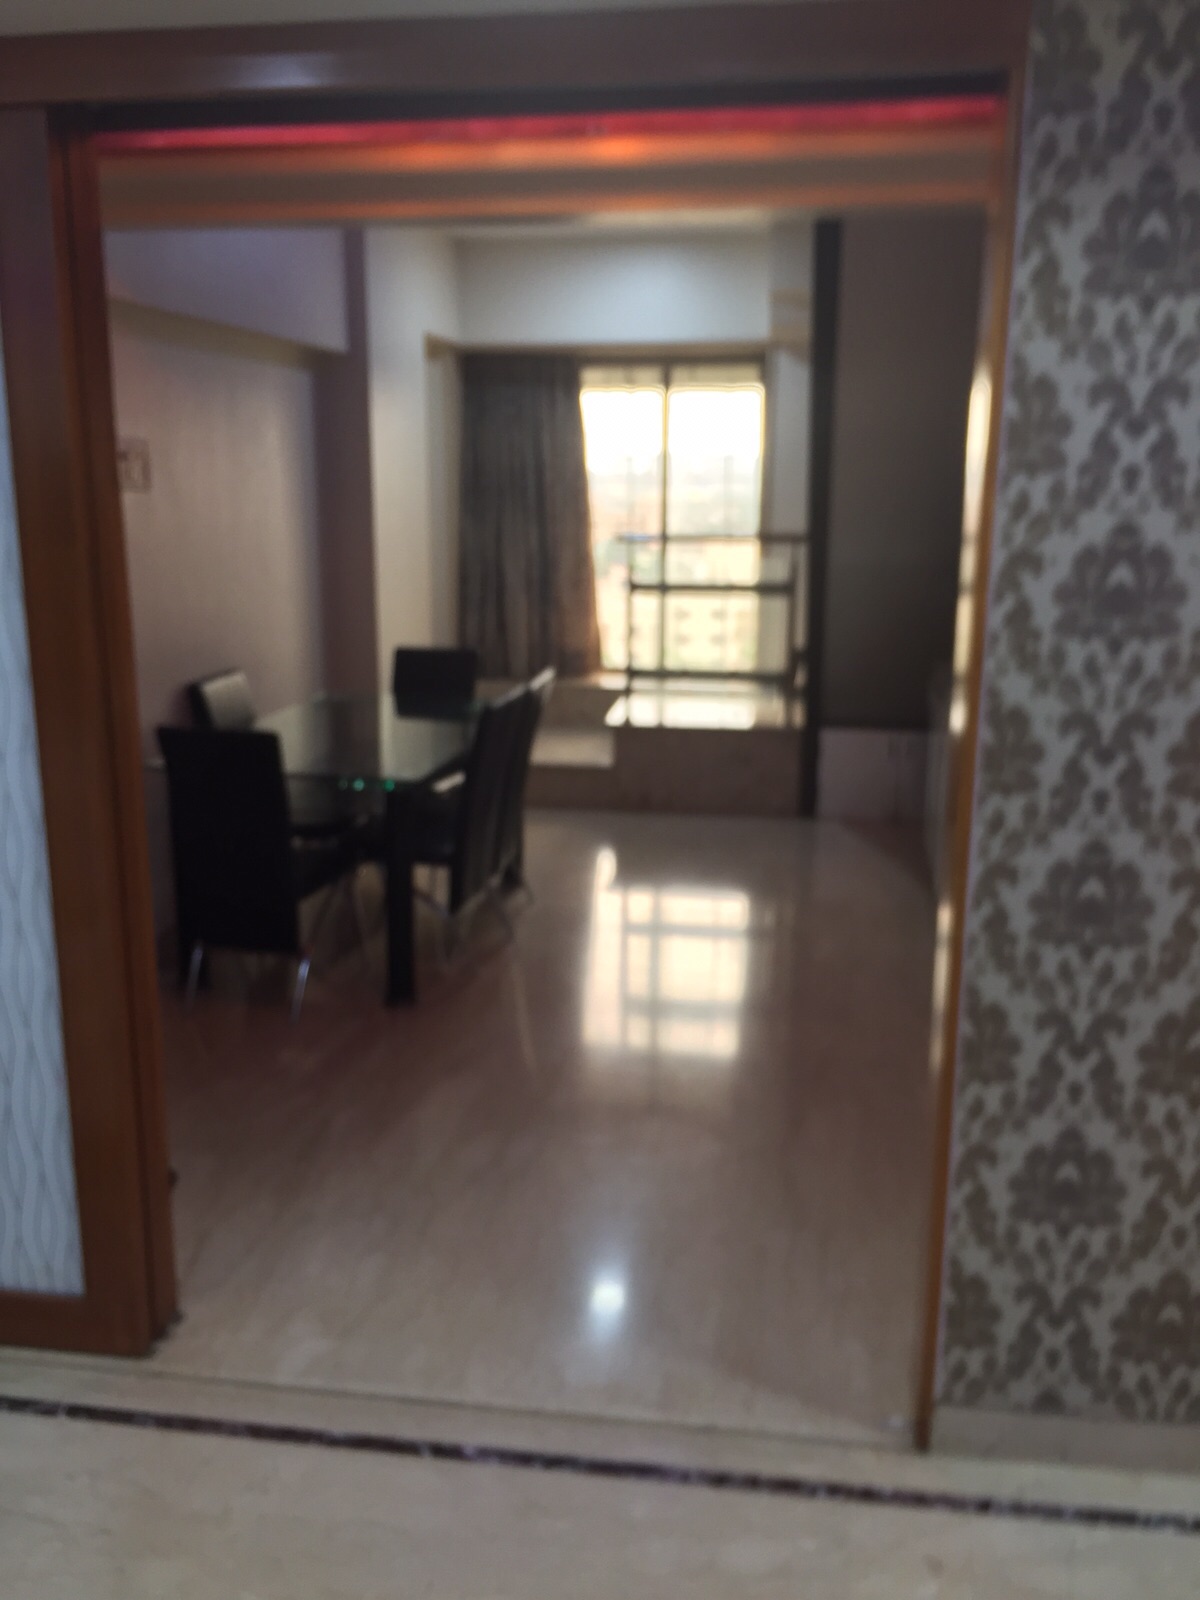 Residential Multistorey Apartment for Sale in Good Society, Chembur , Chembur-West, Mumbai